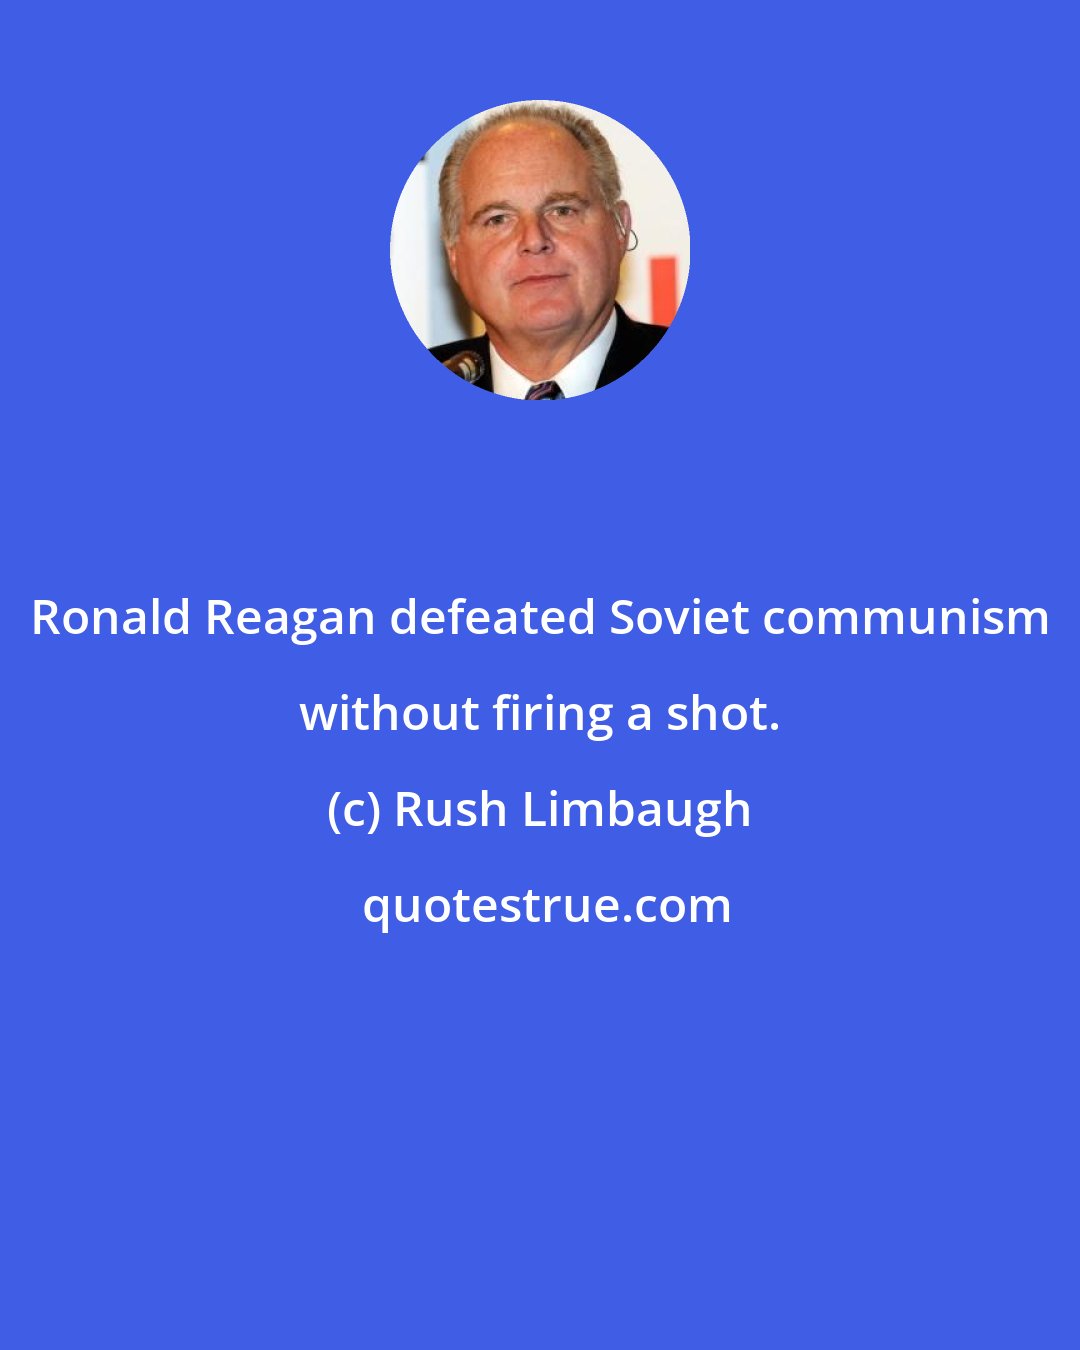 Rush Limbaugh: Ronald Reagan defeated Soviet communism without firing a shot.